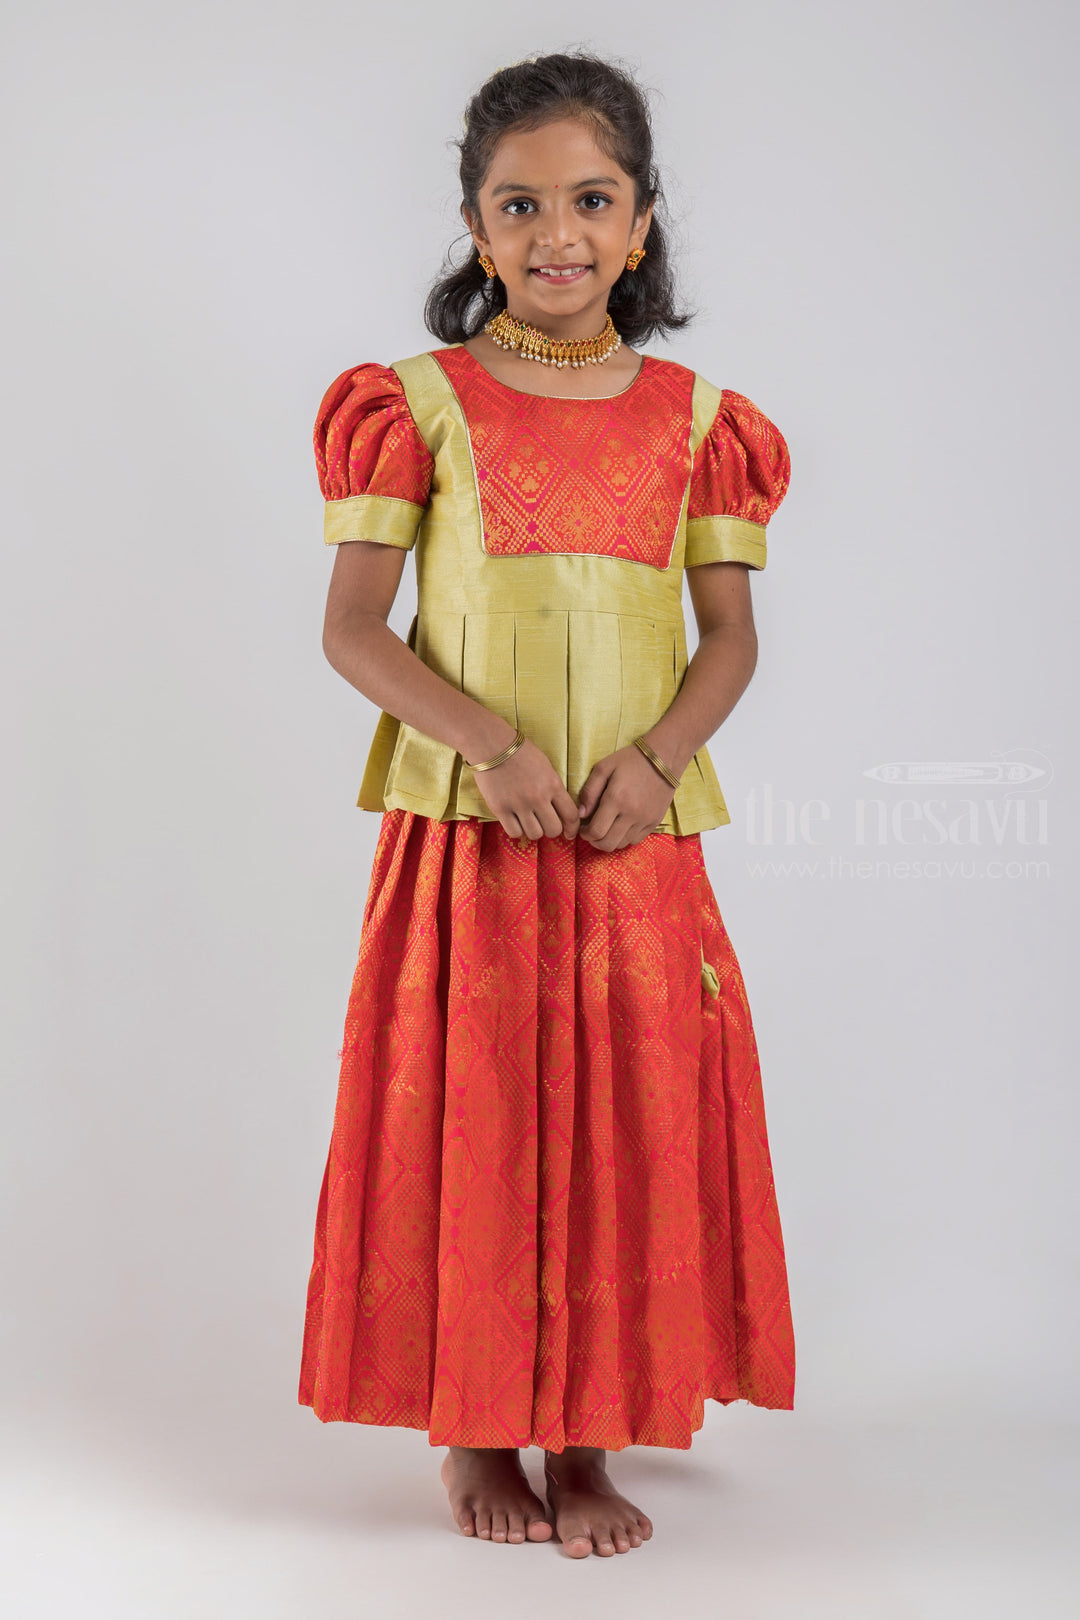 The Nesavu Pattu Pavadai Kerala Pattu Pavadai Designs: Timeless Elegance for Your Little One psr silks Nesavu 16 (1Y) / Orange / Jacquard GPP280A